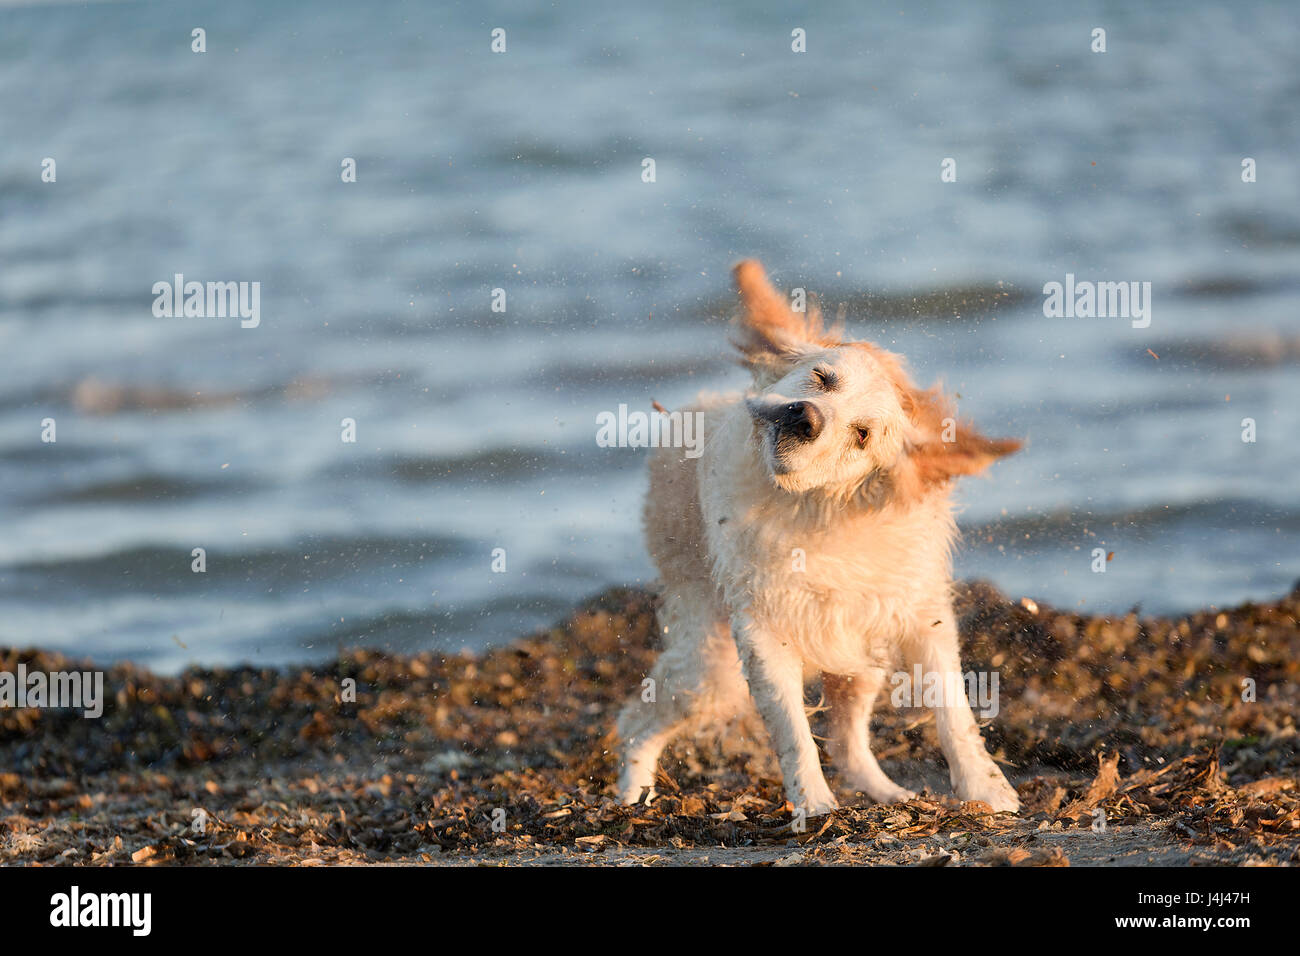 Santa Pola Beach Dog High Resolution Stock Photography and Images - Alamy